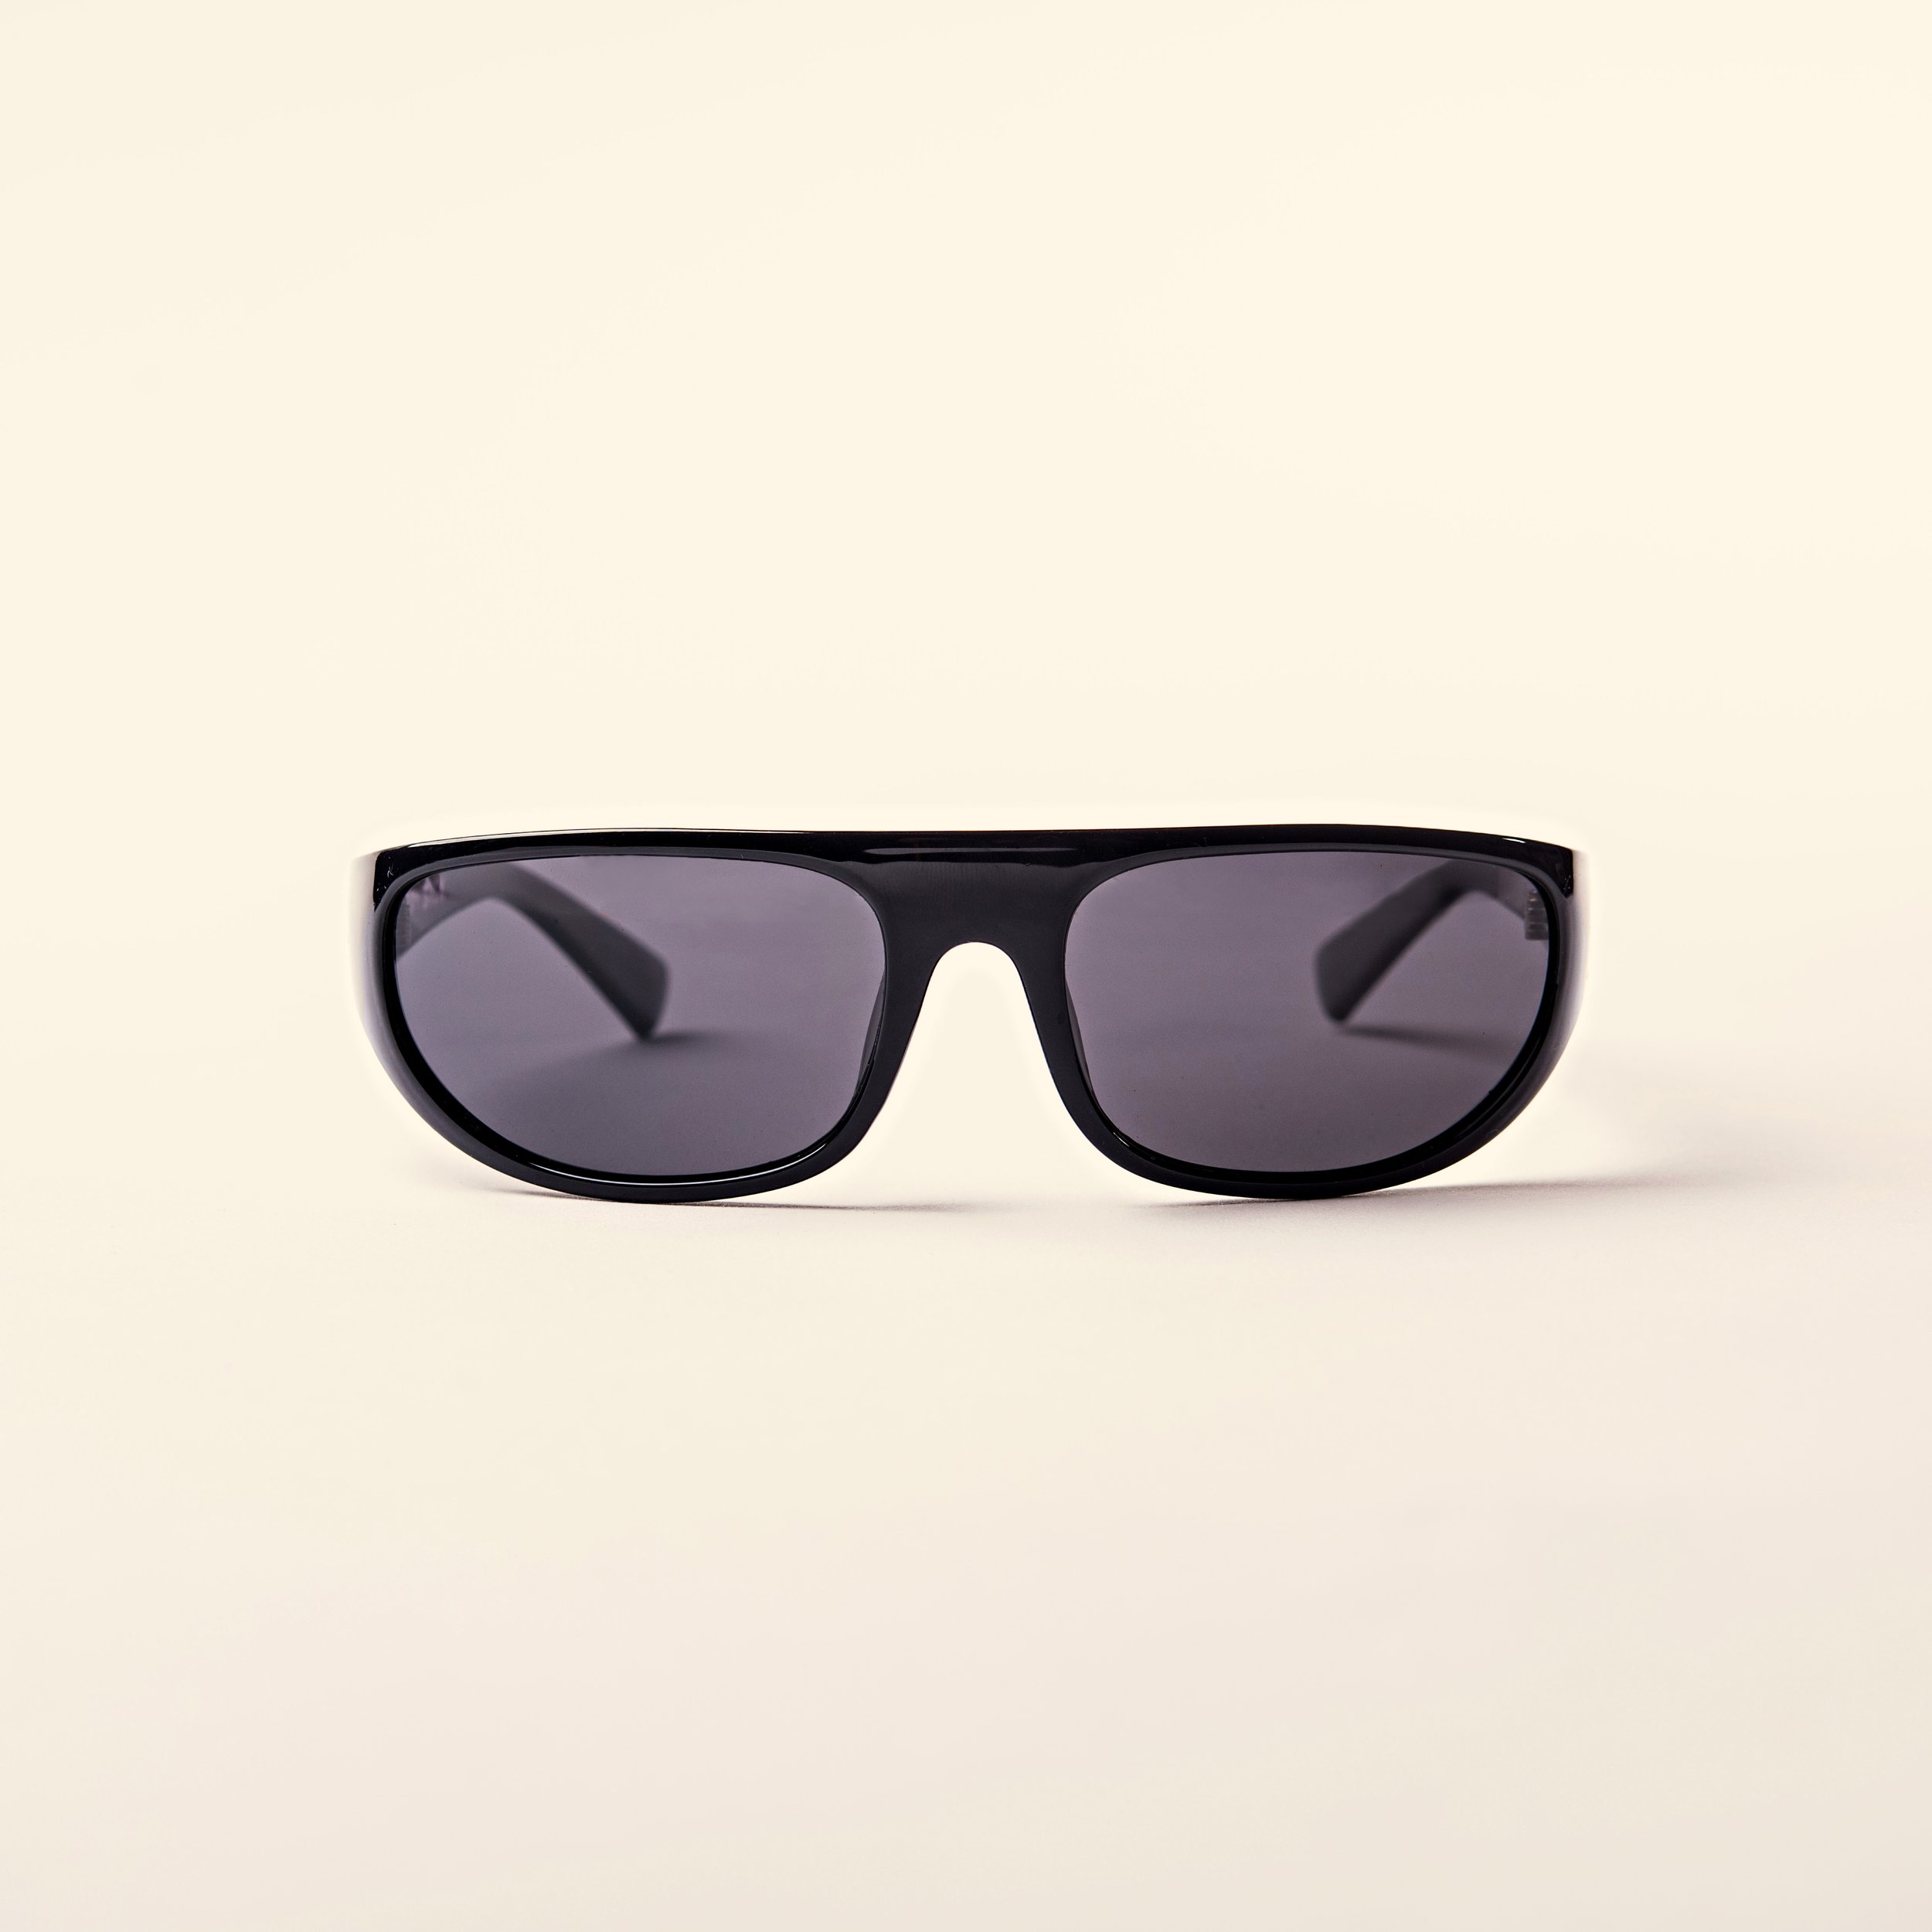 Pro Goggles Black Fade Frame/Revo Lens Sunglasses PWC Jetski Racer -  Walmart.com